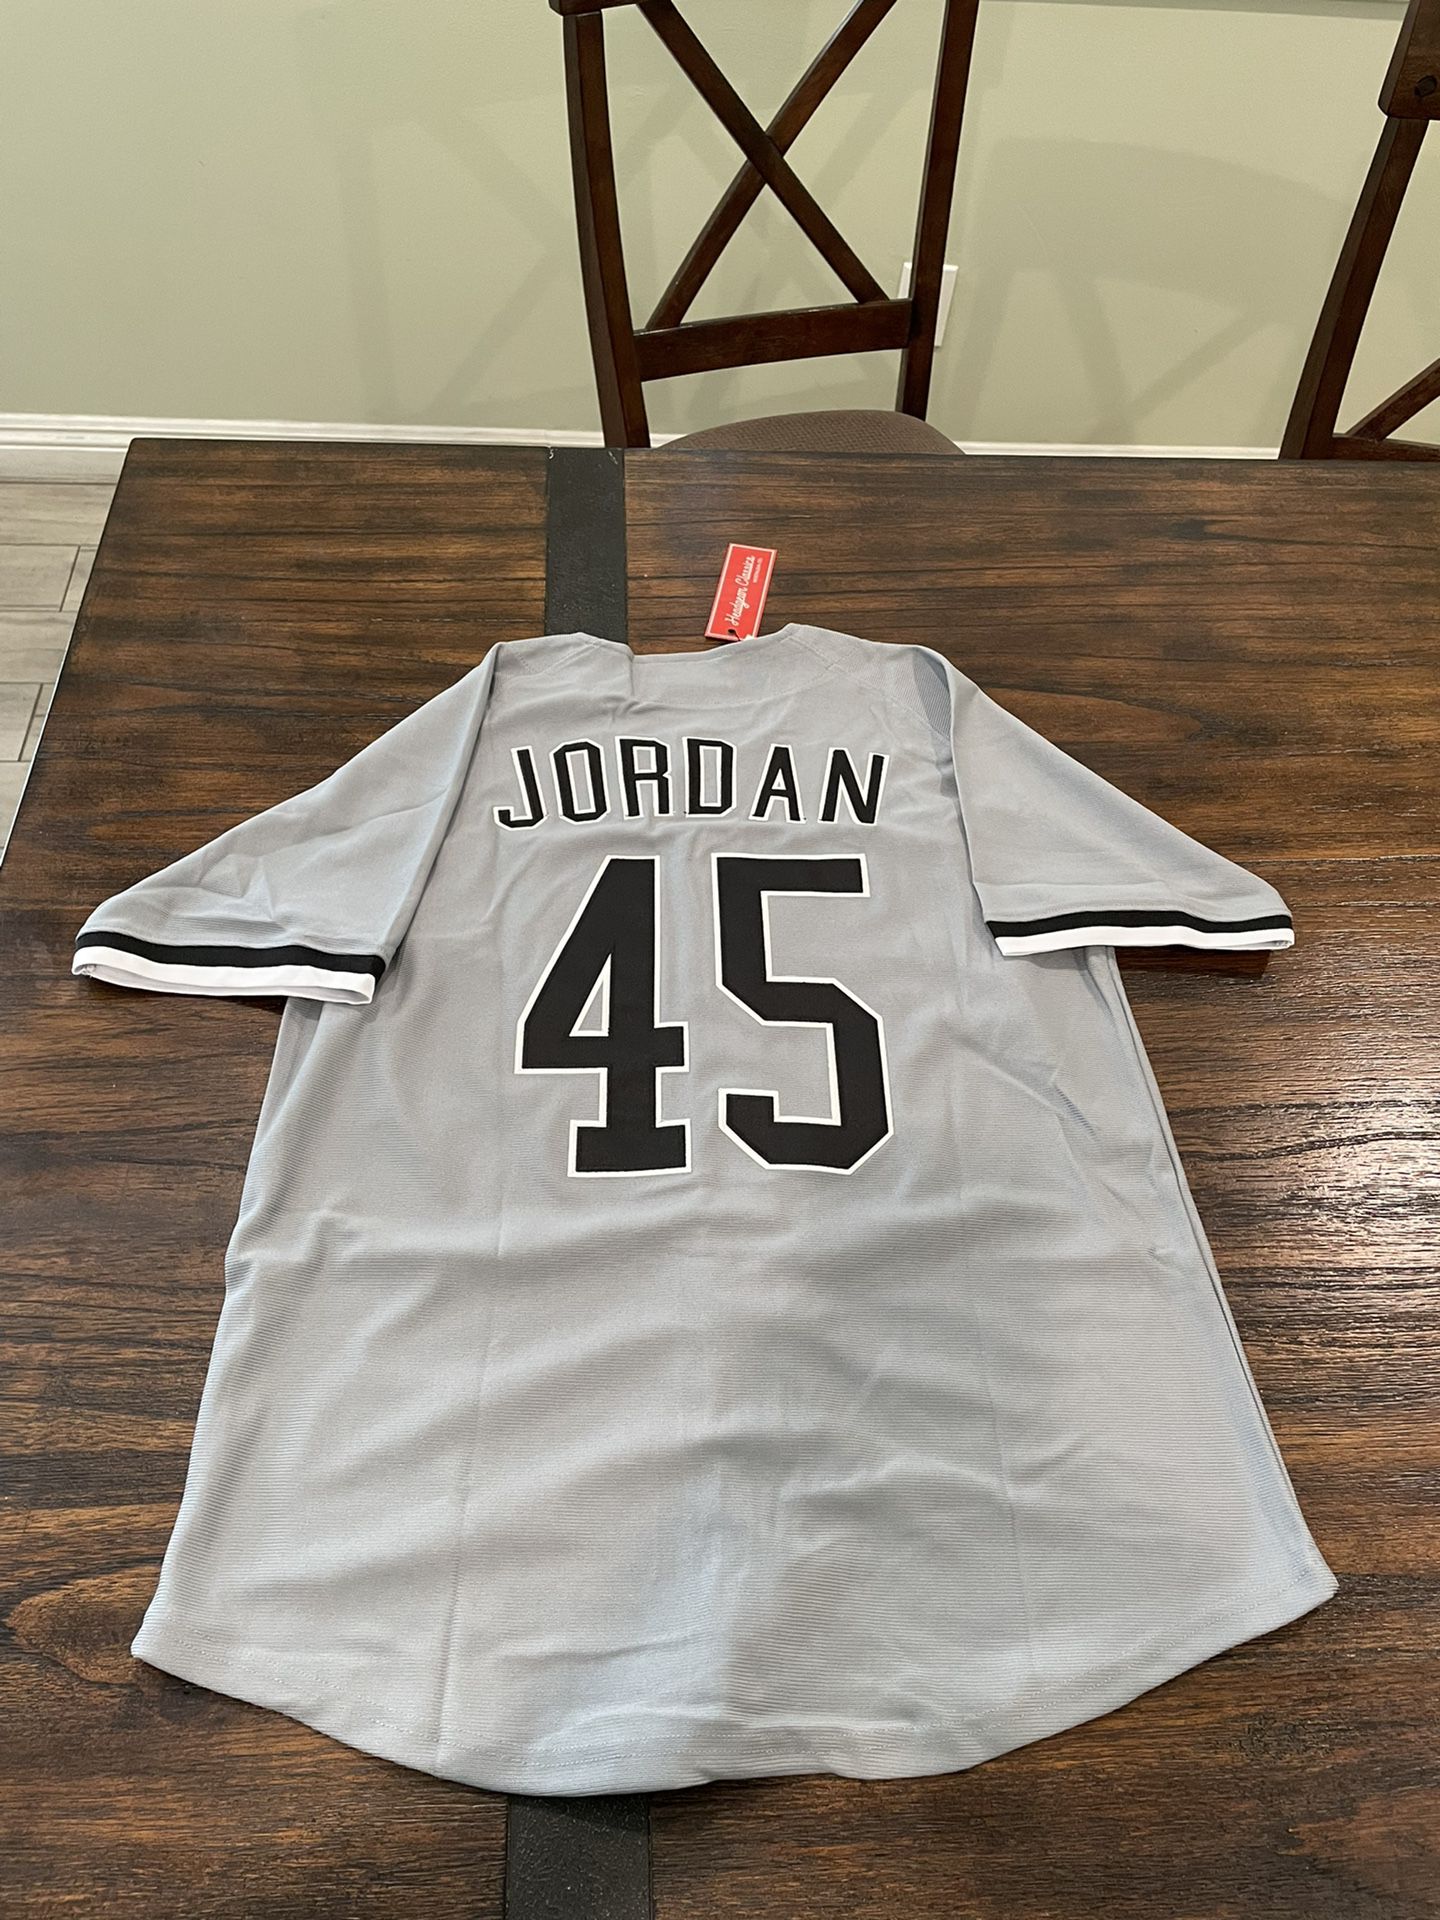 MLB Headgear Classics Chicago Grey Sox Barons #45 Michael Jordan white pinstripe minor league men’s jersey size Small And 3x